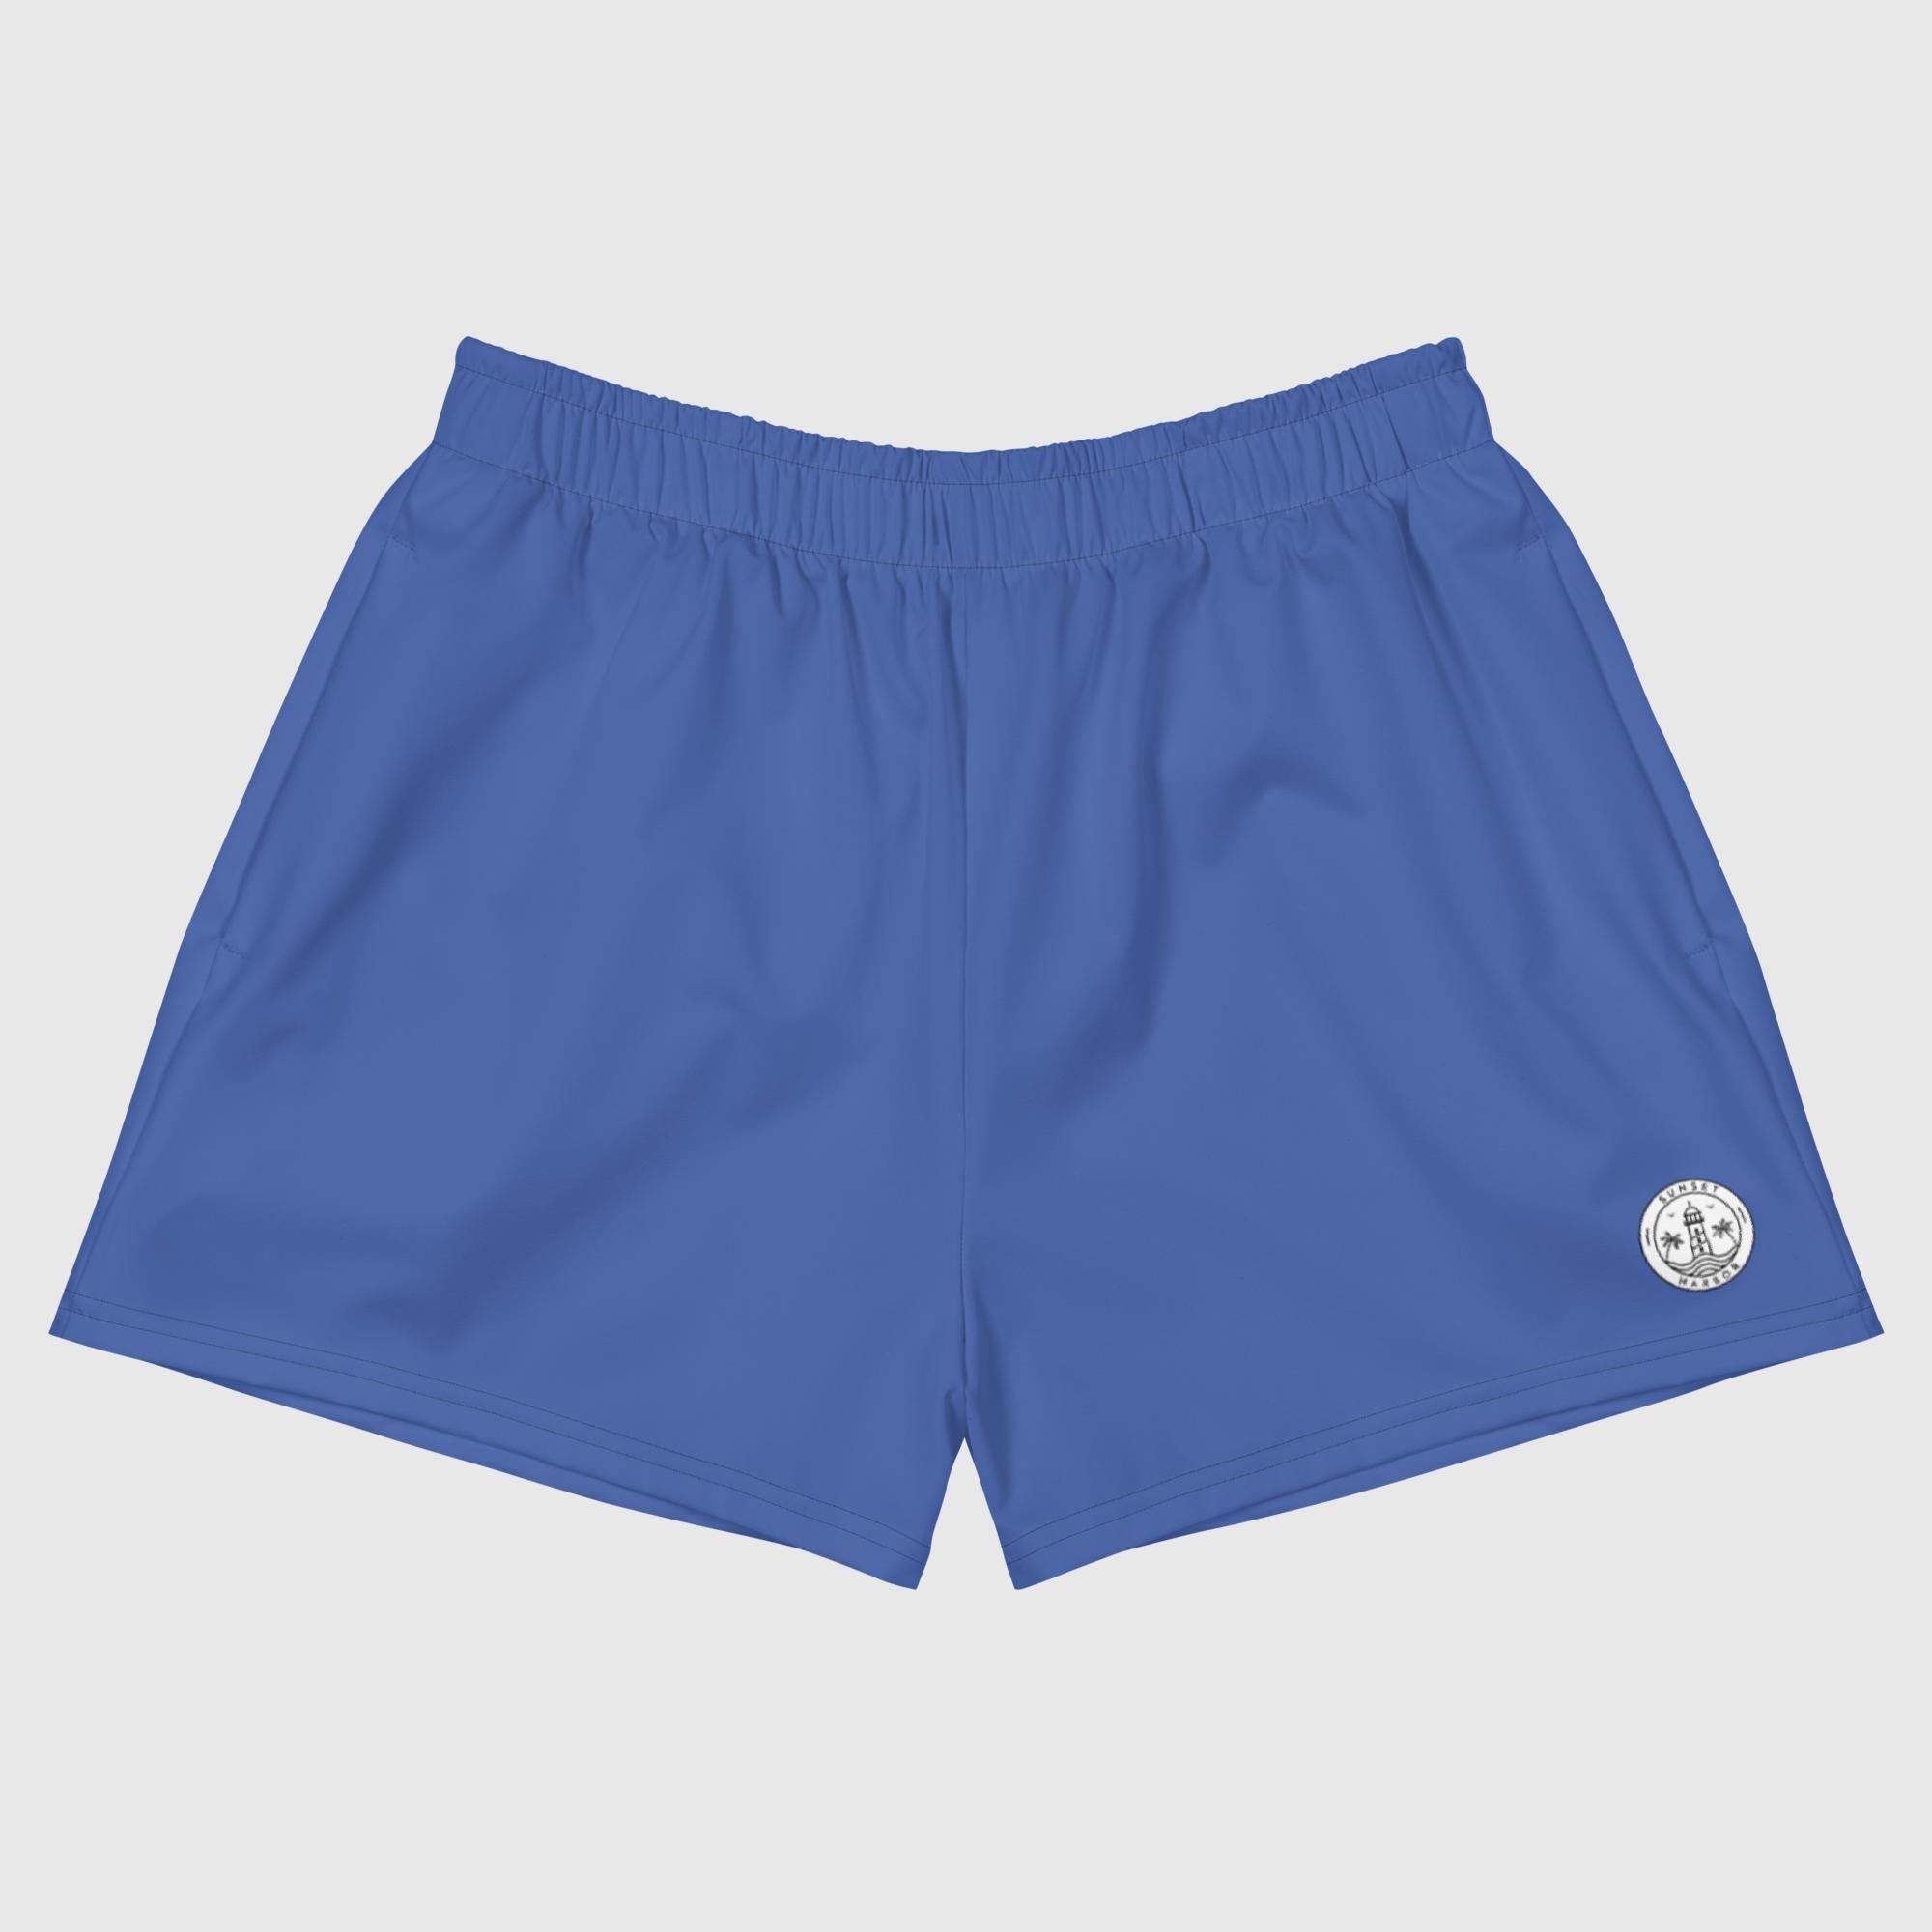 Women's Athletic Short Shorts - Mariner Blue